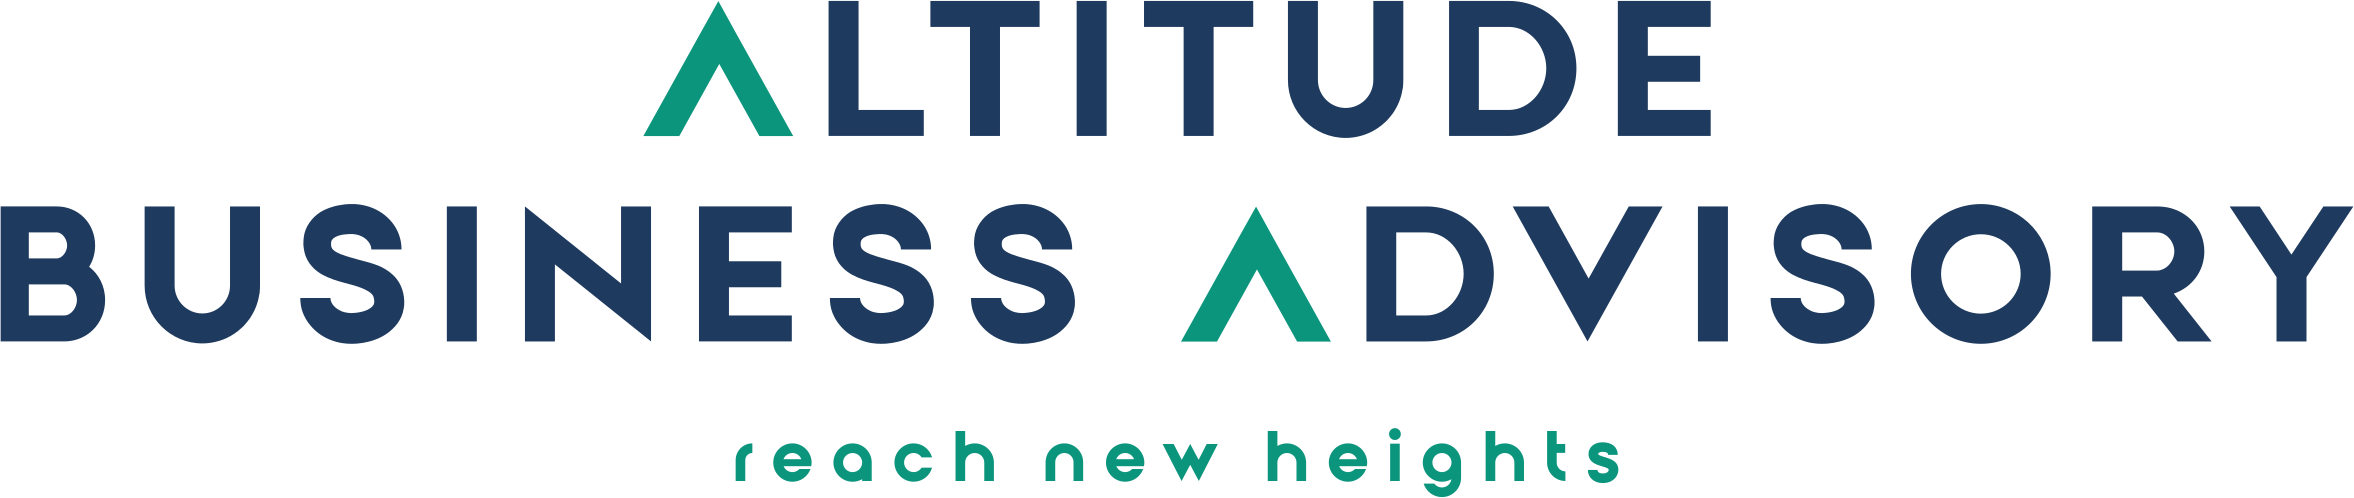 Altitude Business Advisory logo